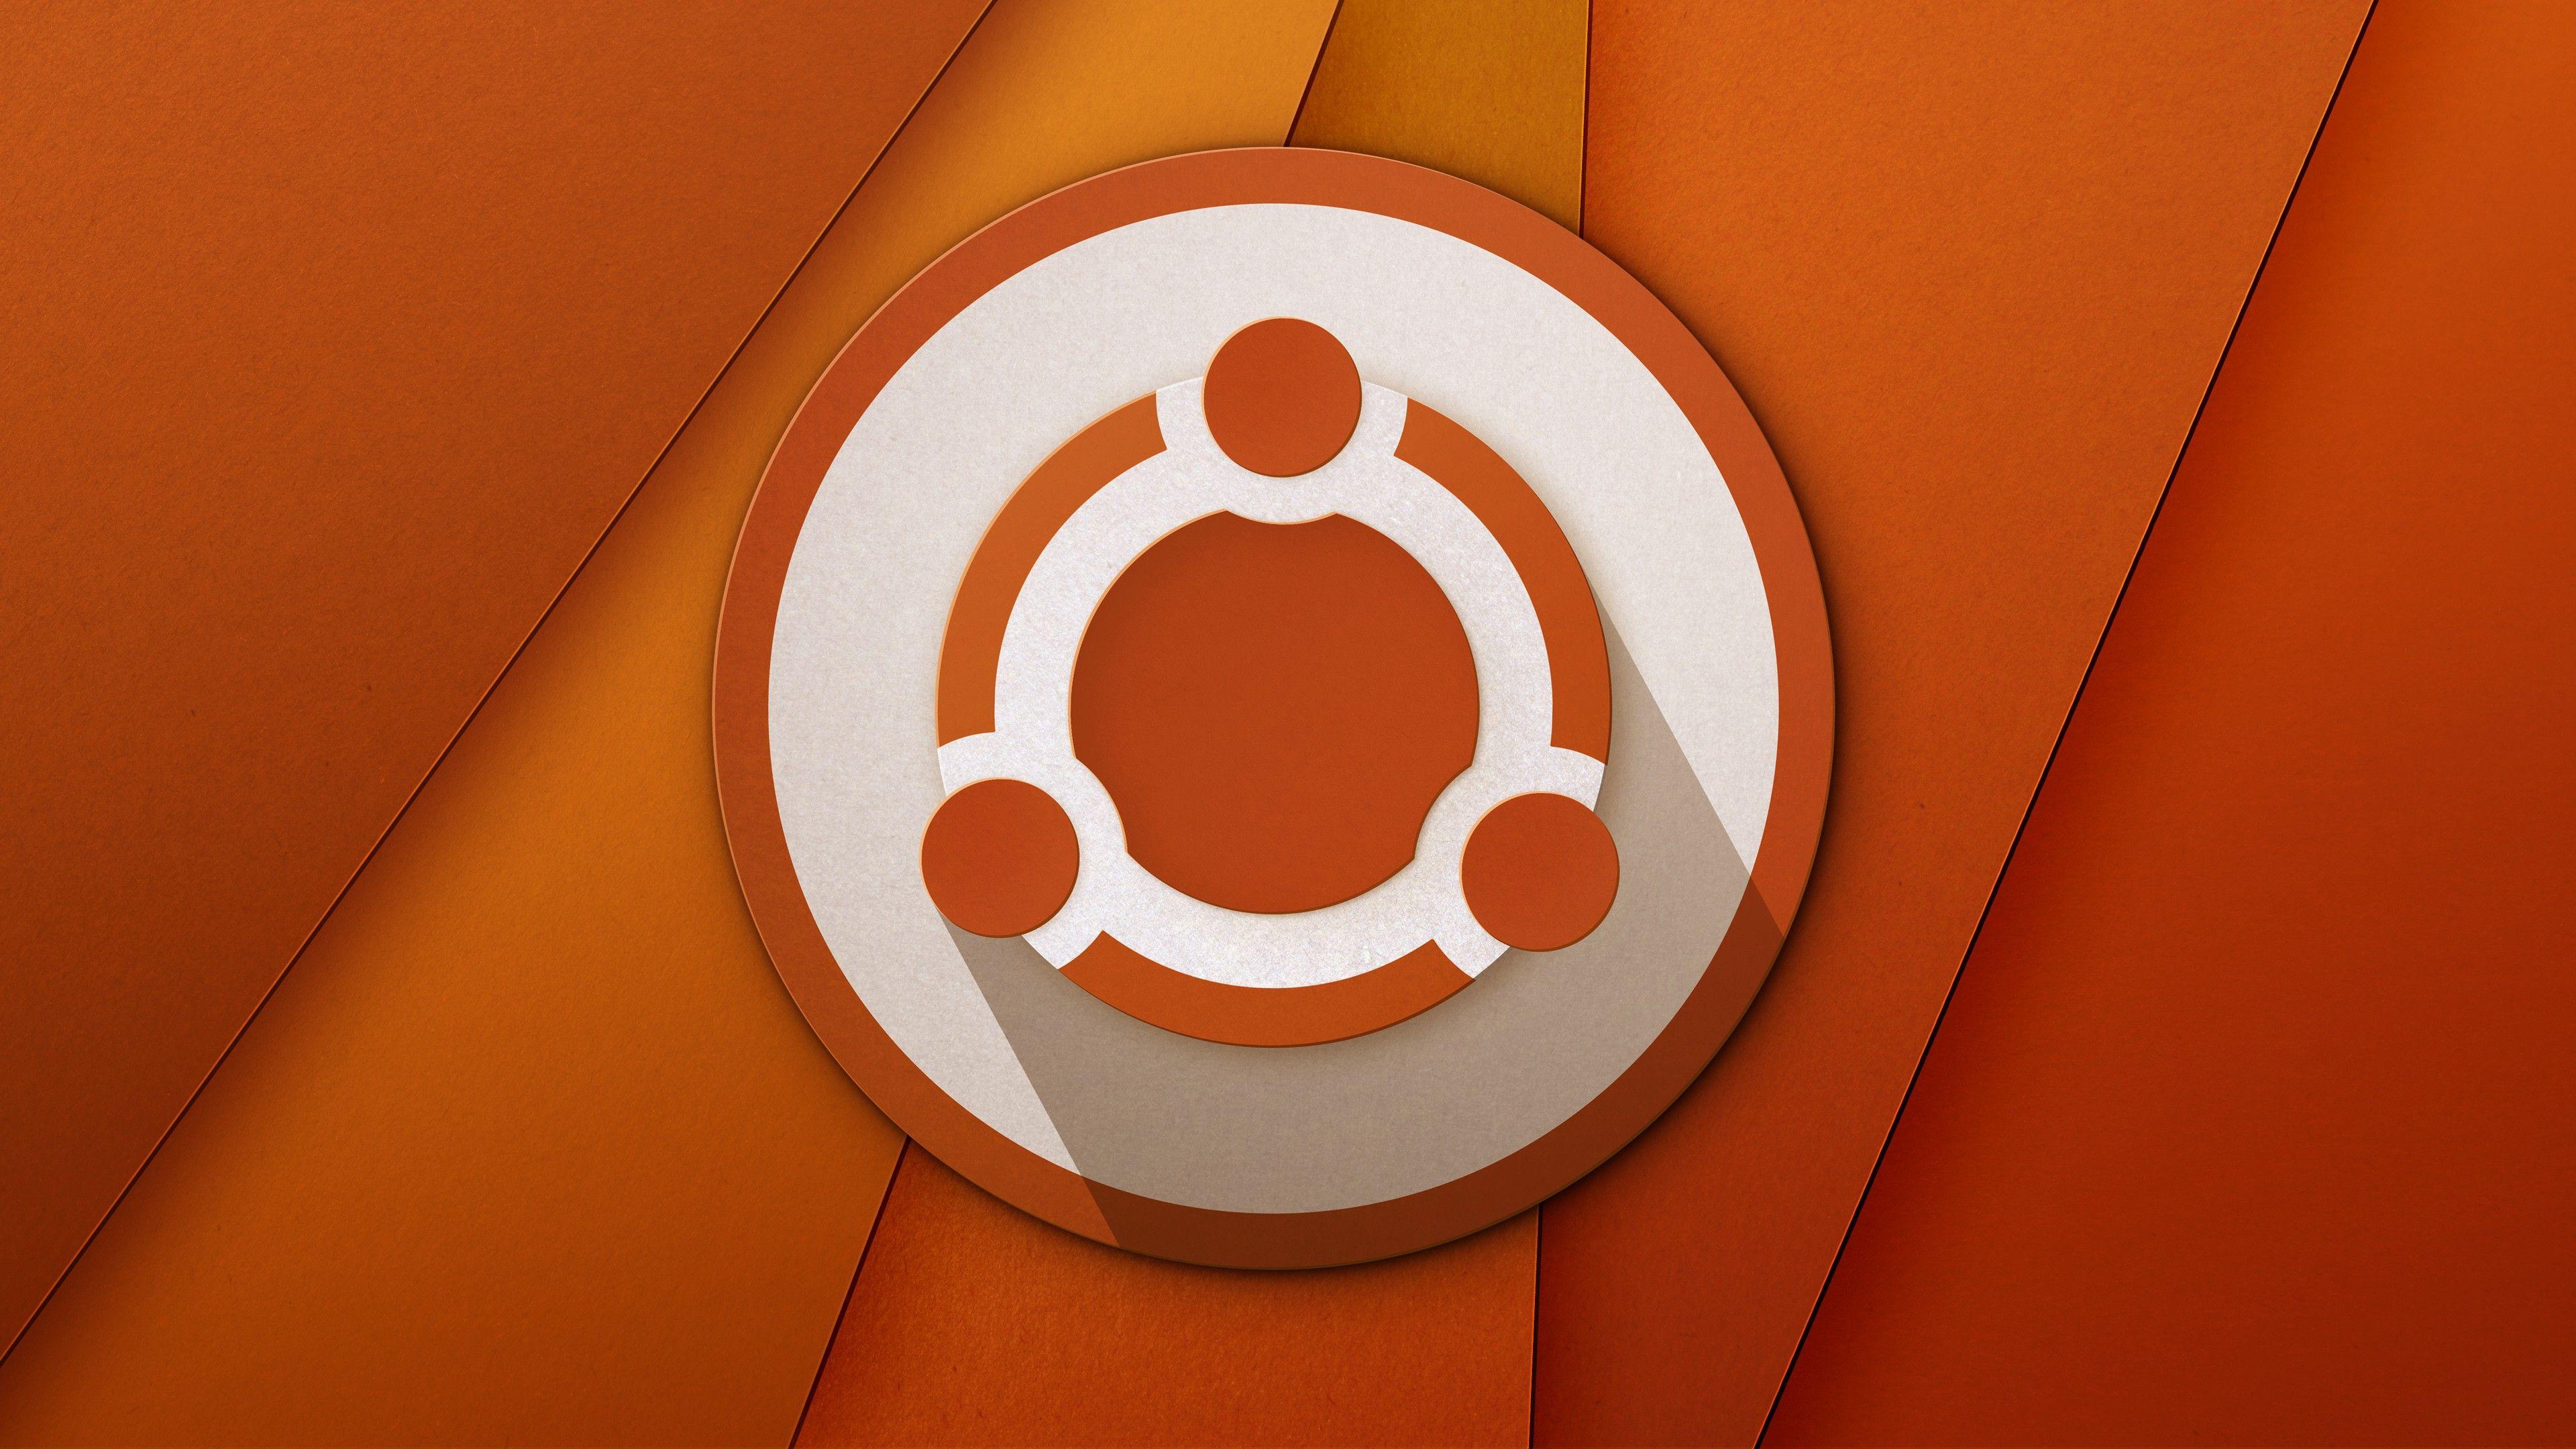 Linux Ubuntu Logo - Wallpaper : colorful, illustration, red, sign, Linux, orange, circle ...